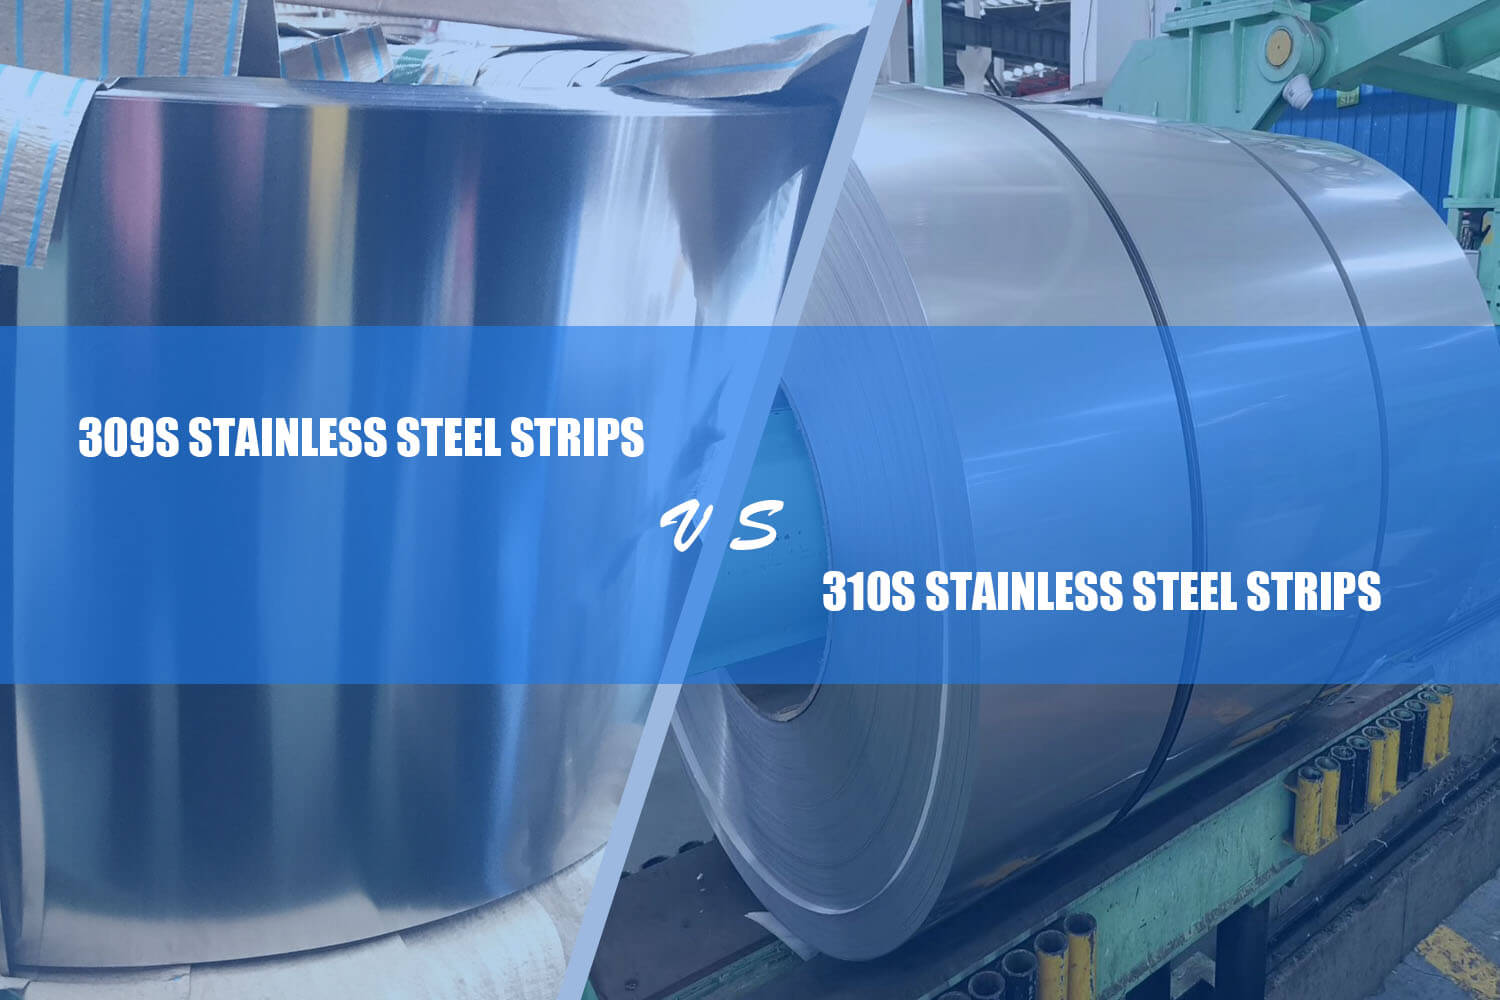 309s stainless steel strip vs 310s stainless steel strip